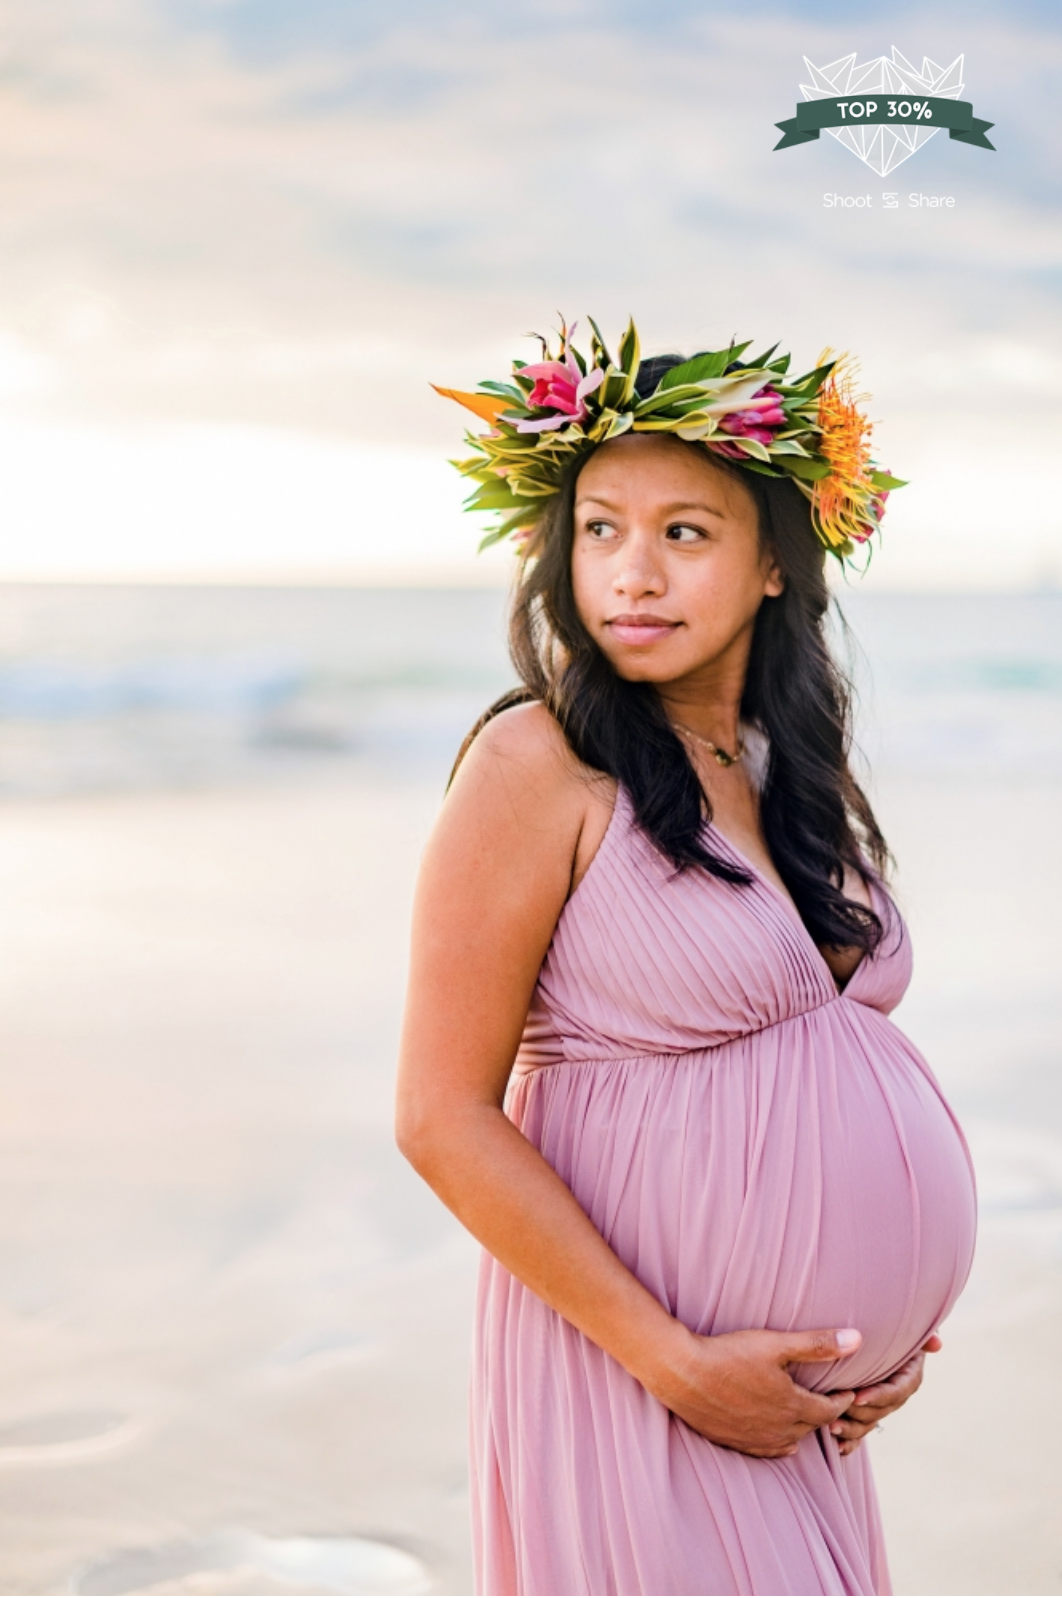 Shoot-Share-Contest-2018-Hawaii-Top-30-Maternity-Babymoon-Photographer.png